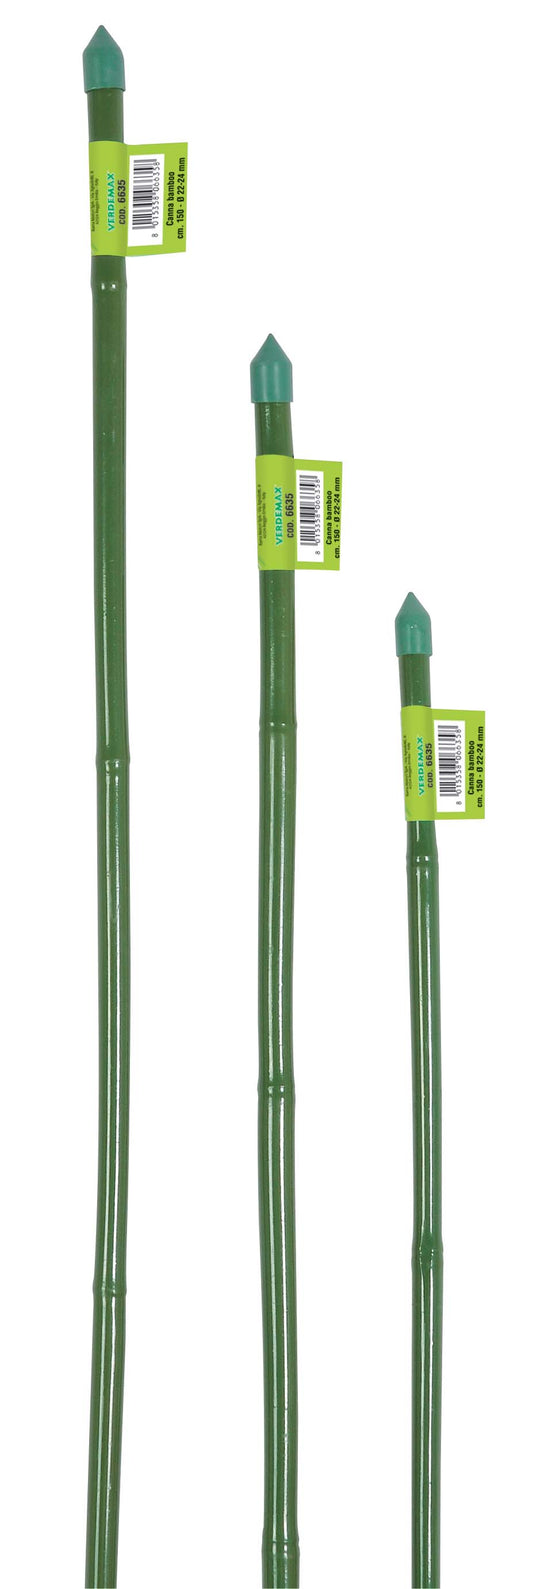 Tutori in bamboo plastificato verde - Verdemax